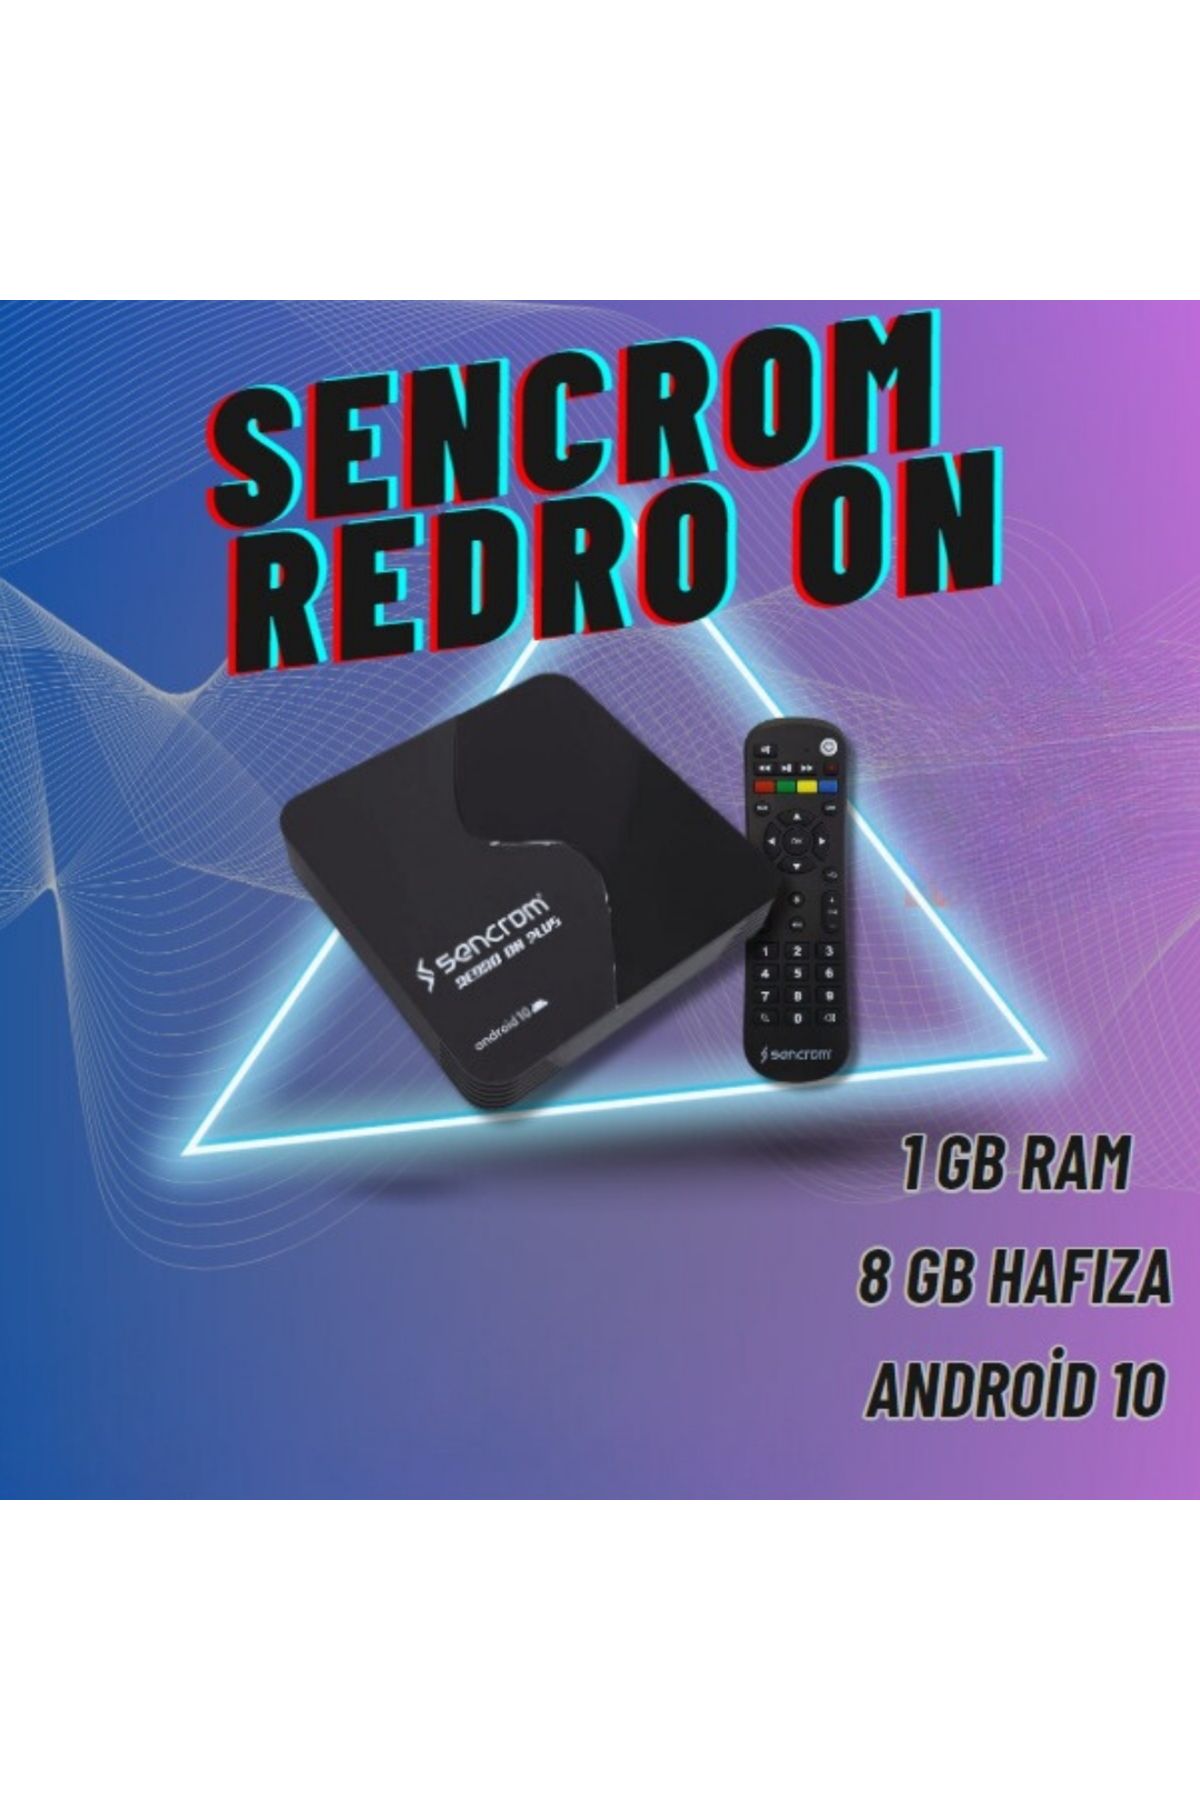 sencrom Redro On Plus 8gb Android Tv Box